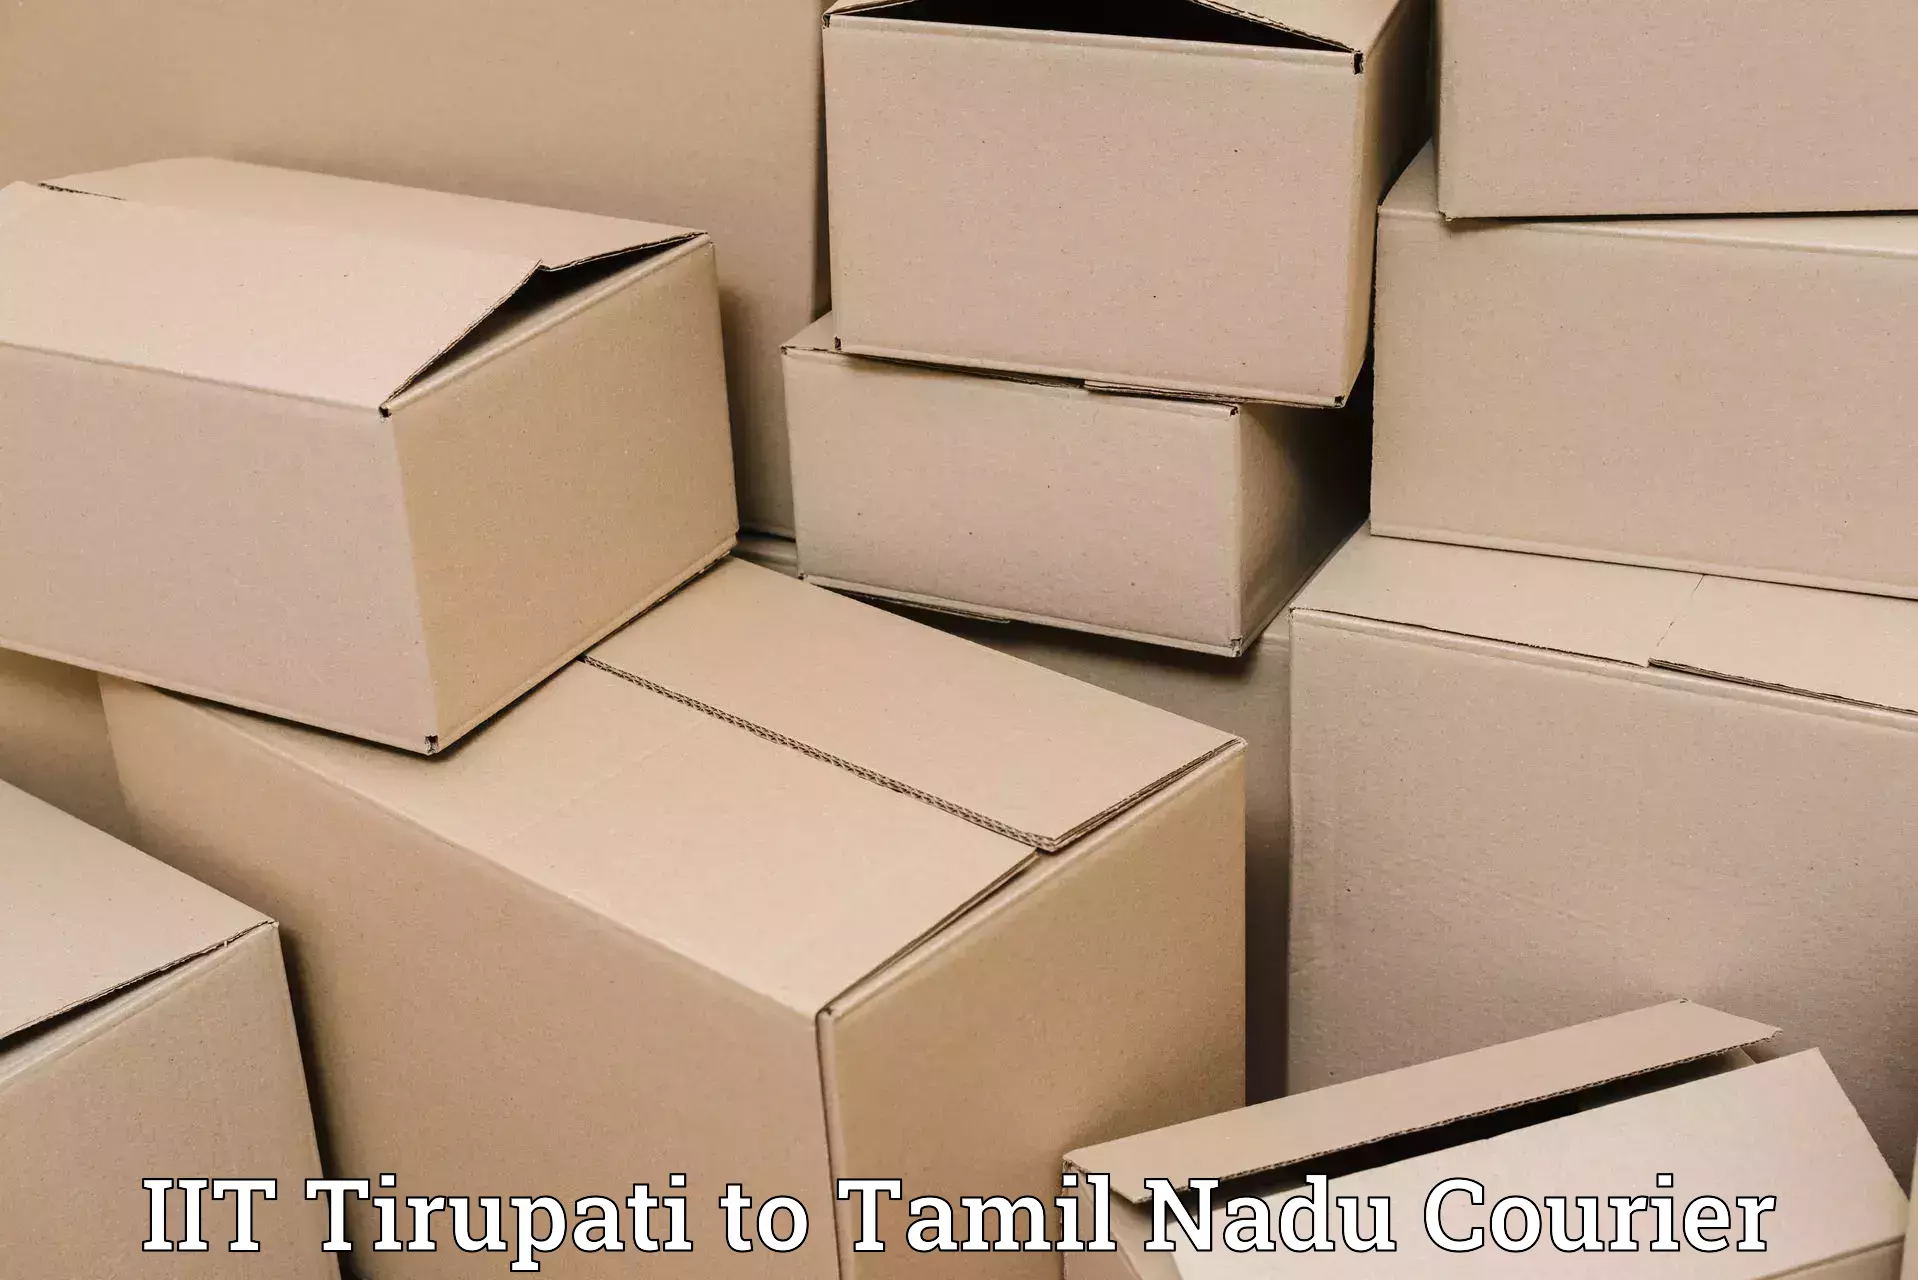 Pharmaceutical courier IIT Tirupati to Villupuram